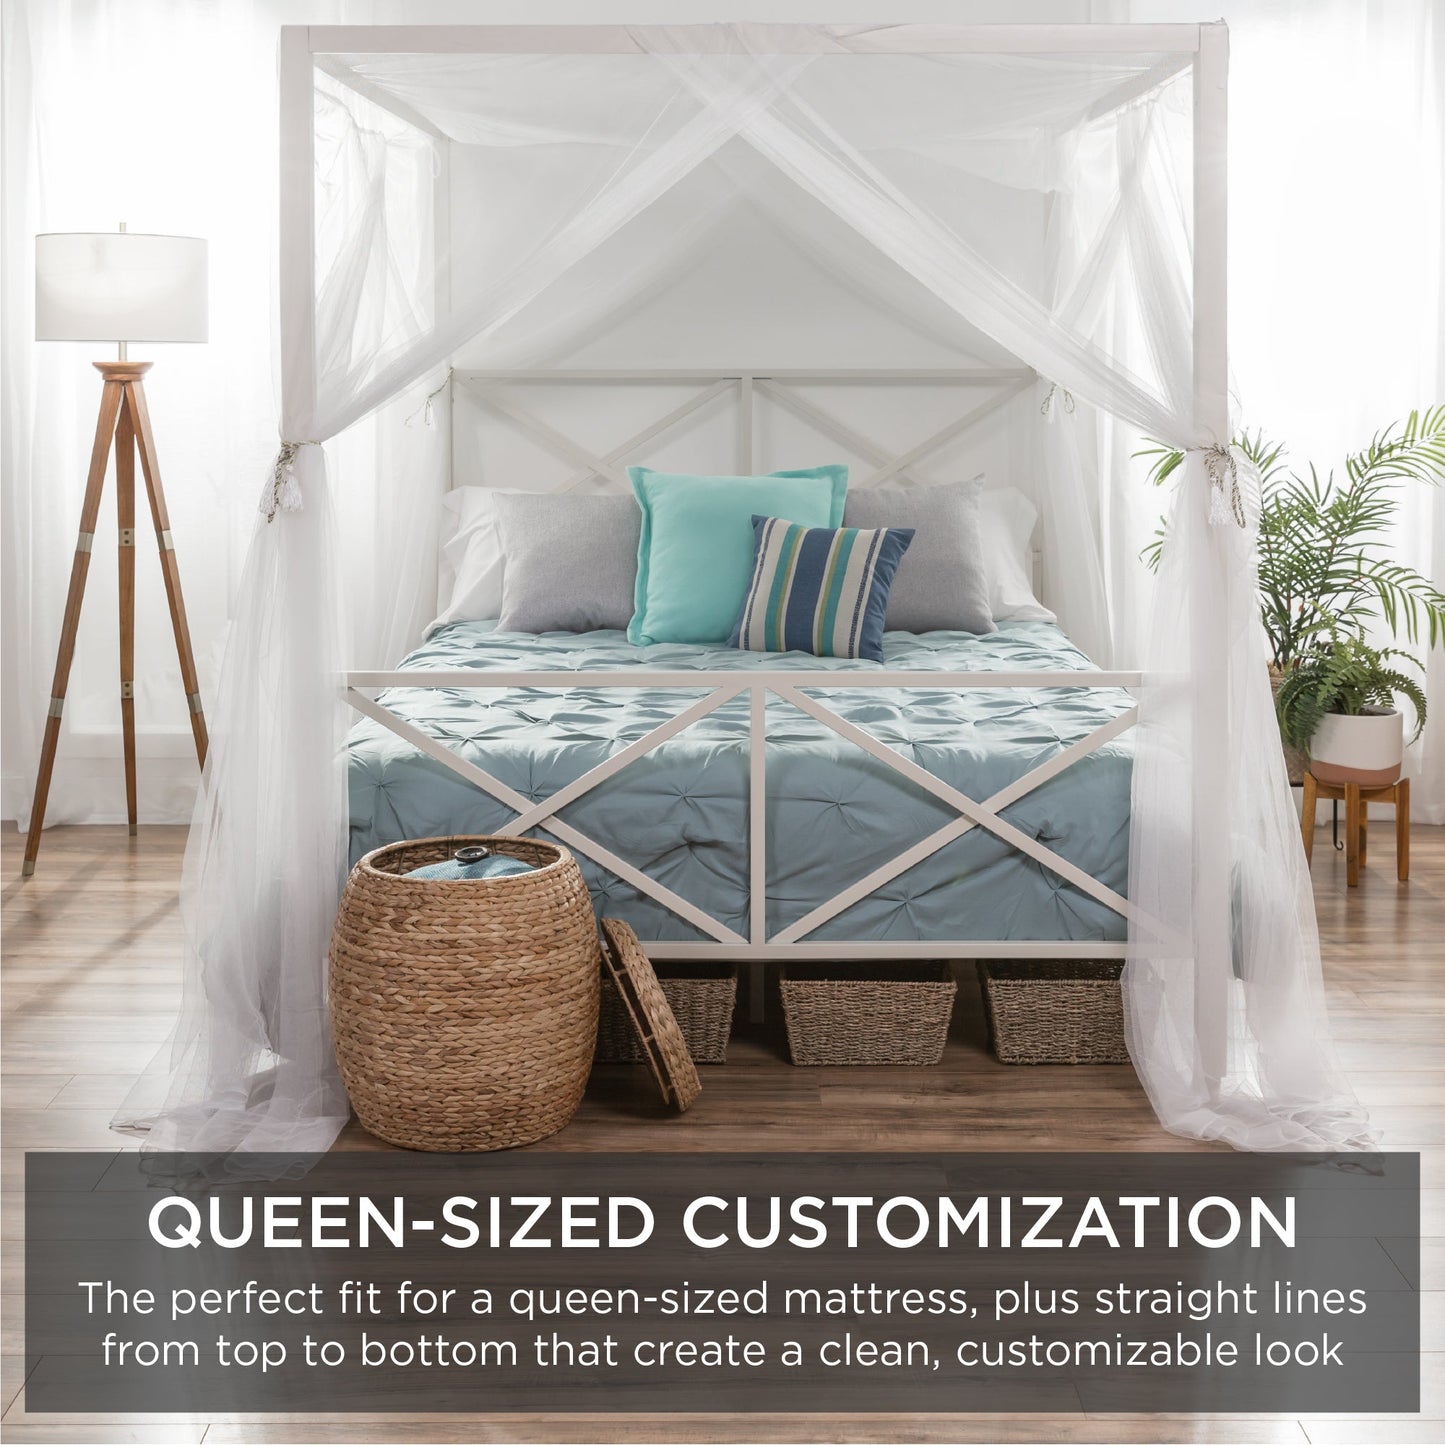 4-Post Queen Size Modern Metal Canopy Bed Frame w/ Headboard, Footboard